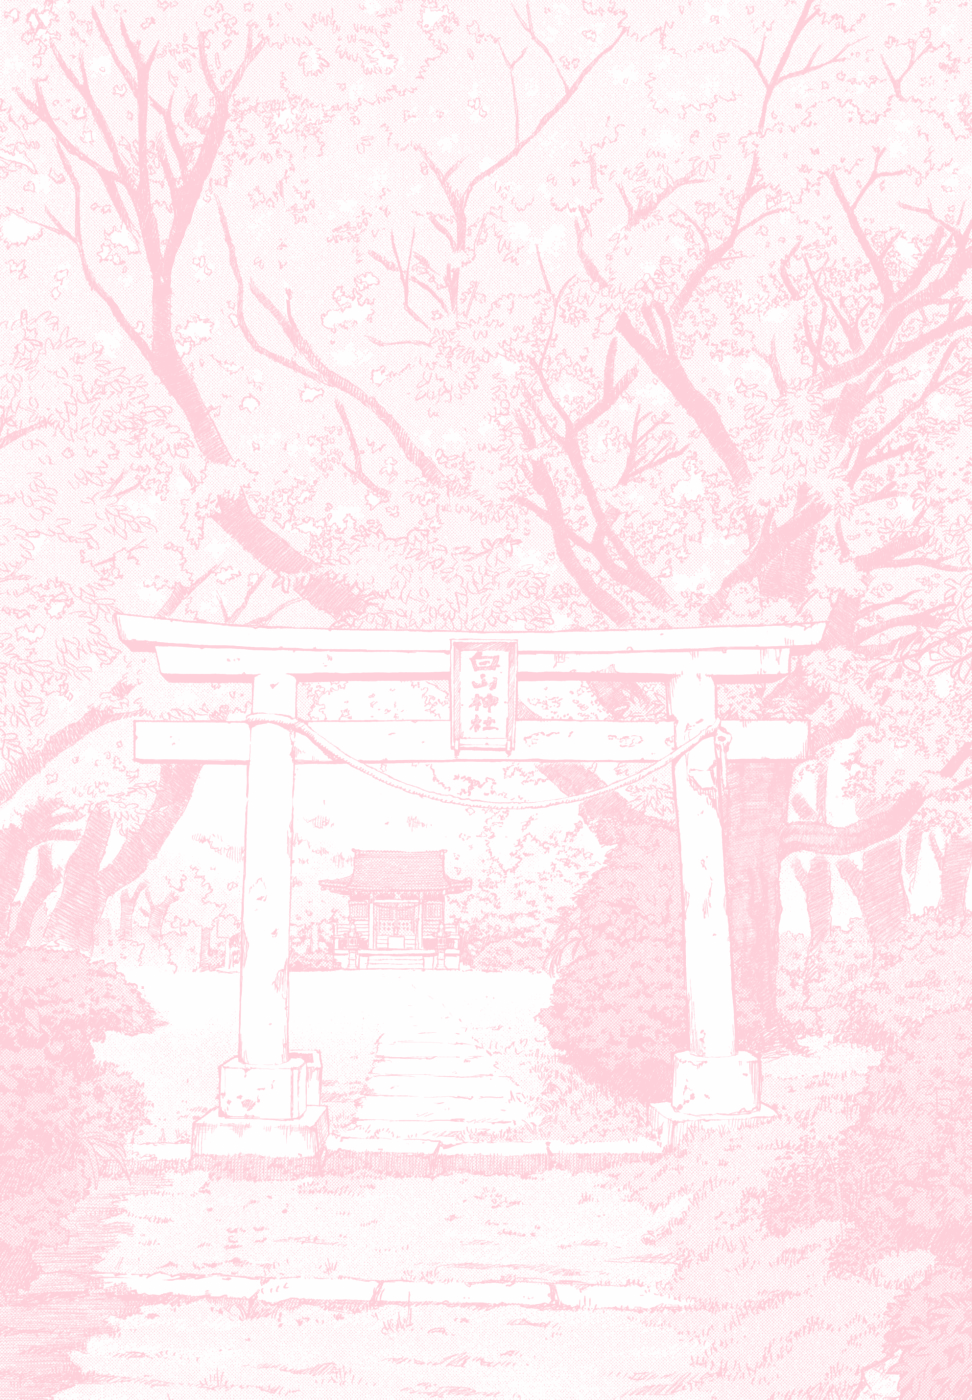 Pastel Pink Anime Aesthetic Wallpaper in 2020